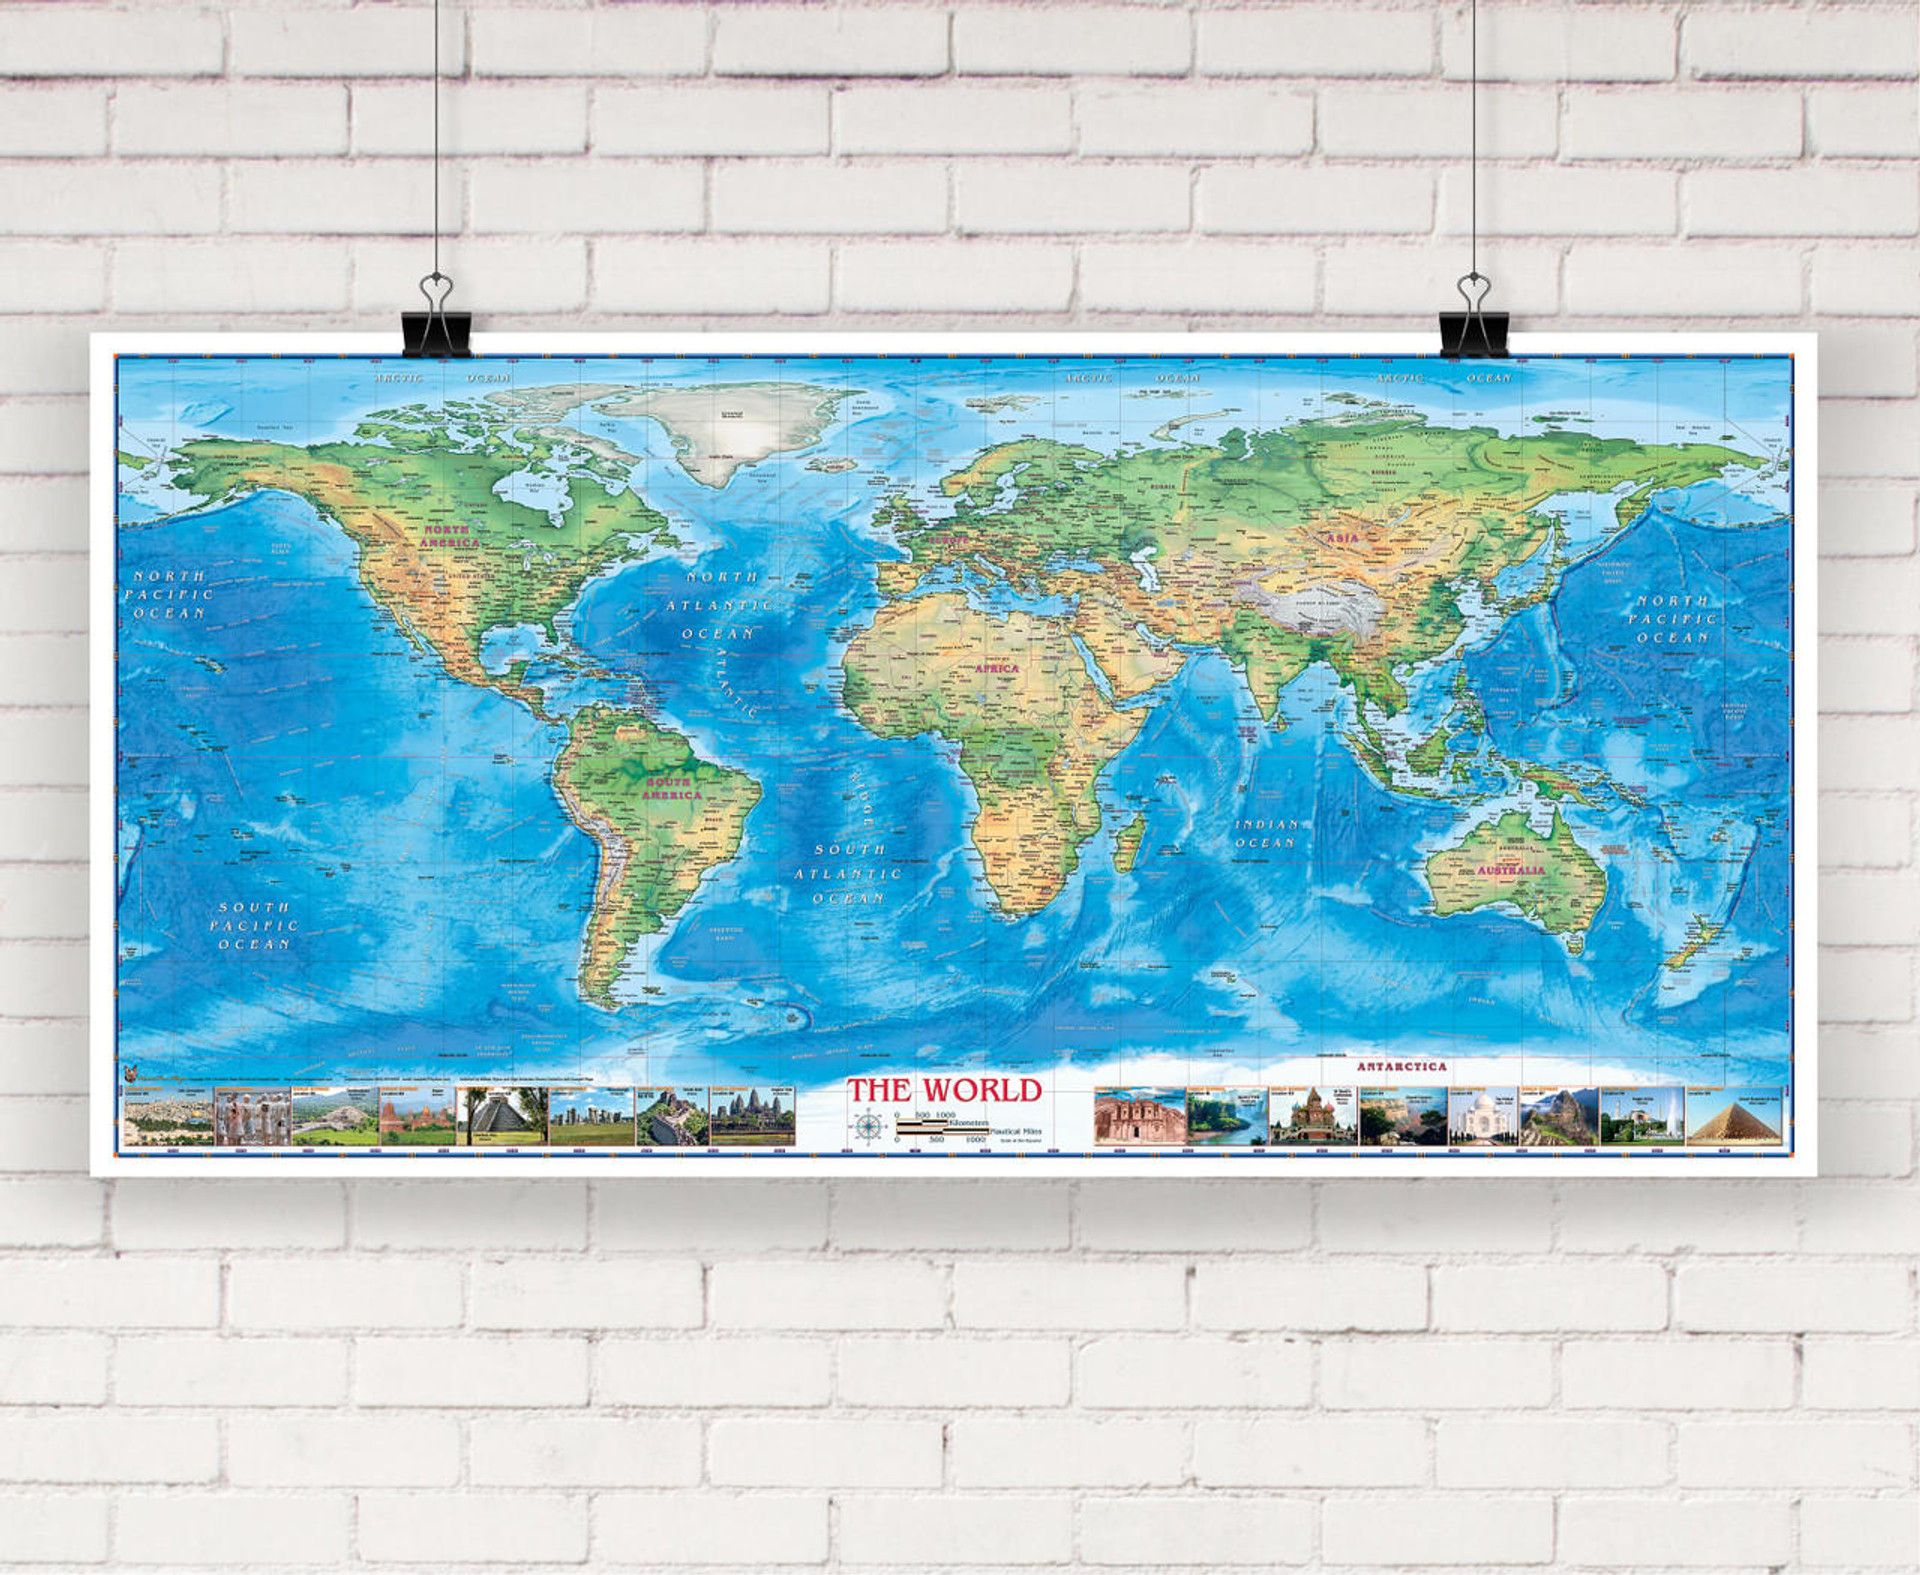 Transit Maps Of The World Mark Ovenden World Maps Online 6719